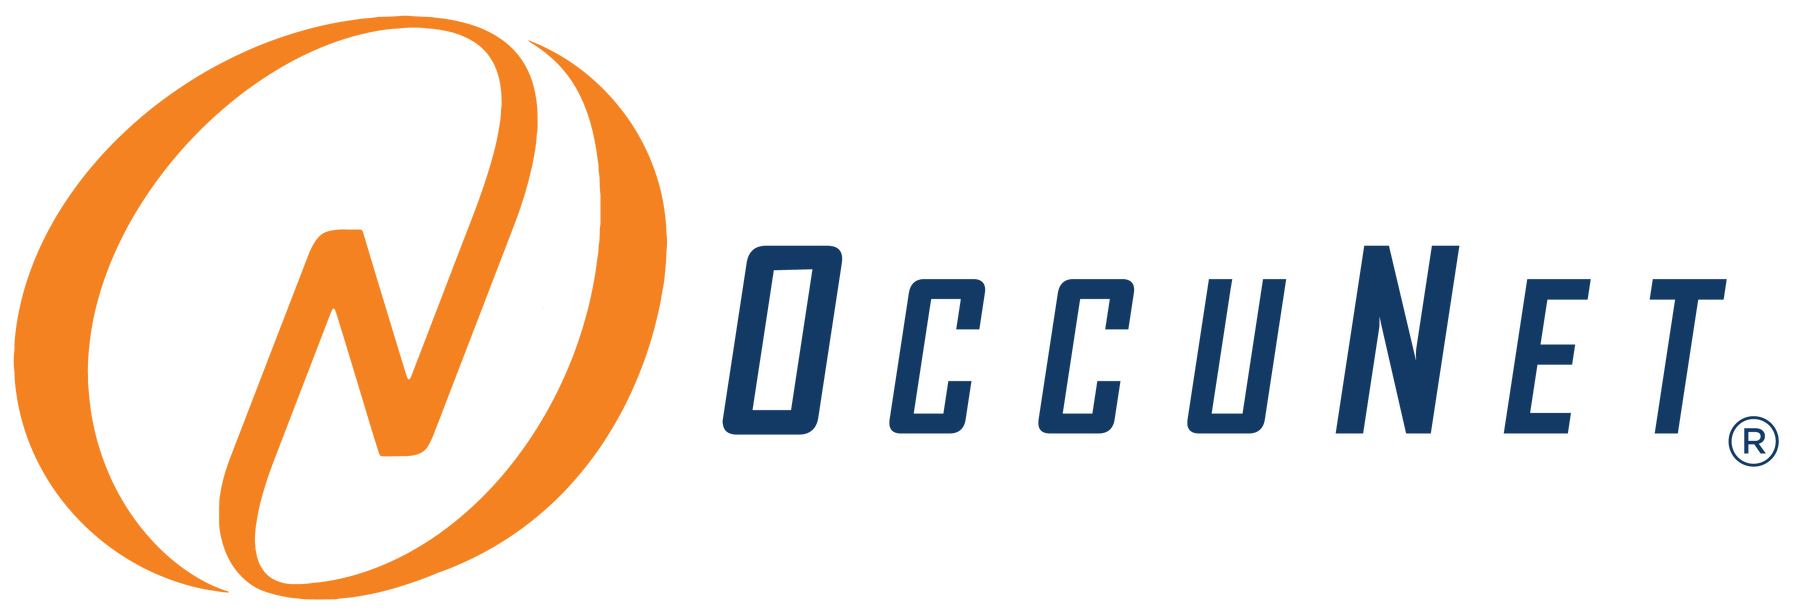 OccuNet Orange Logo